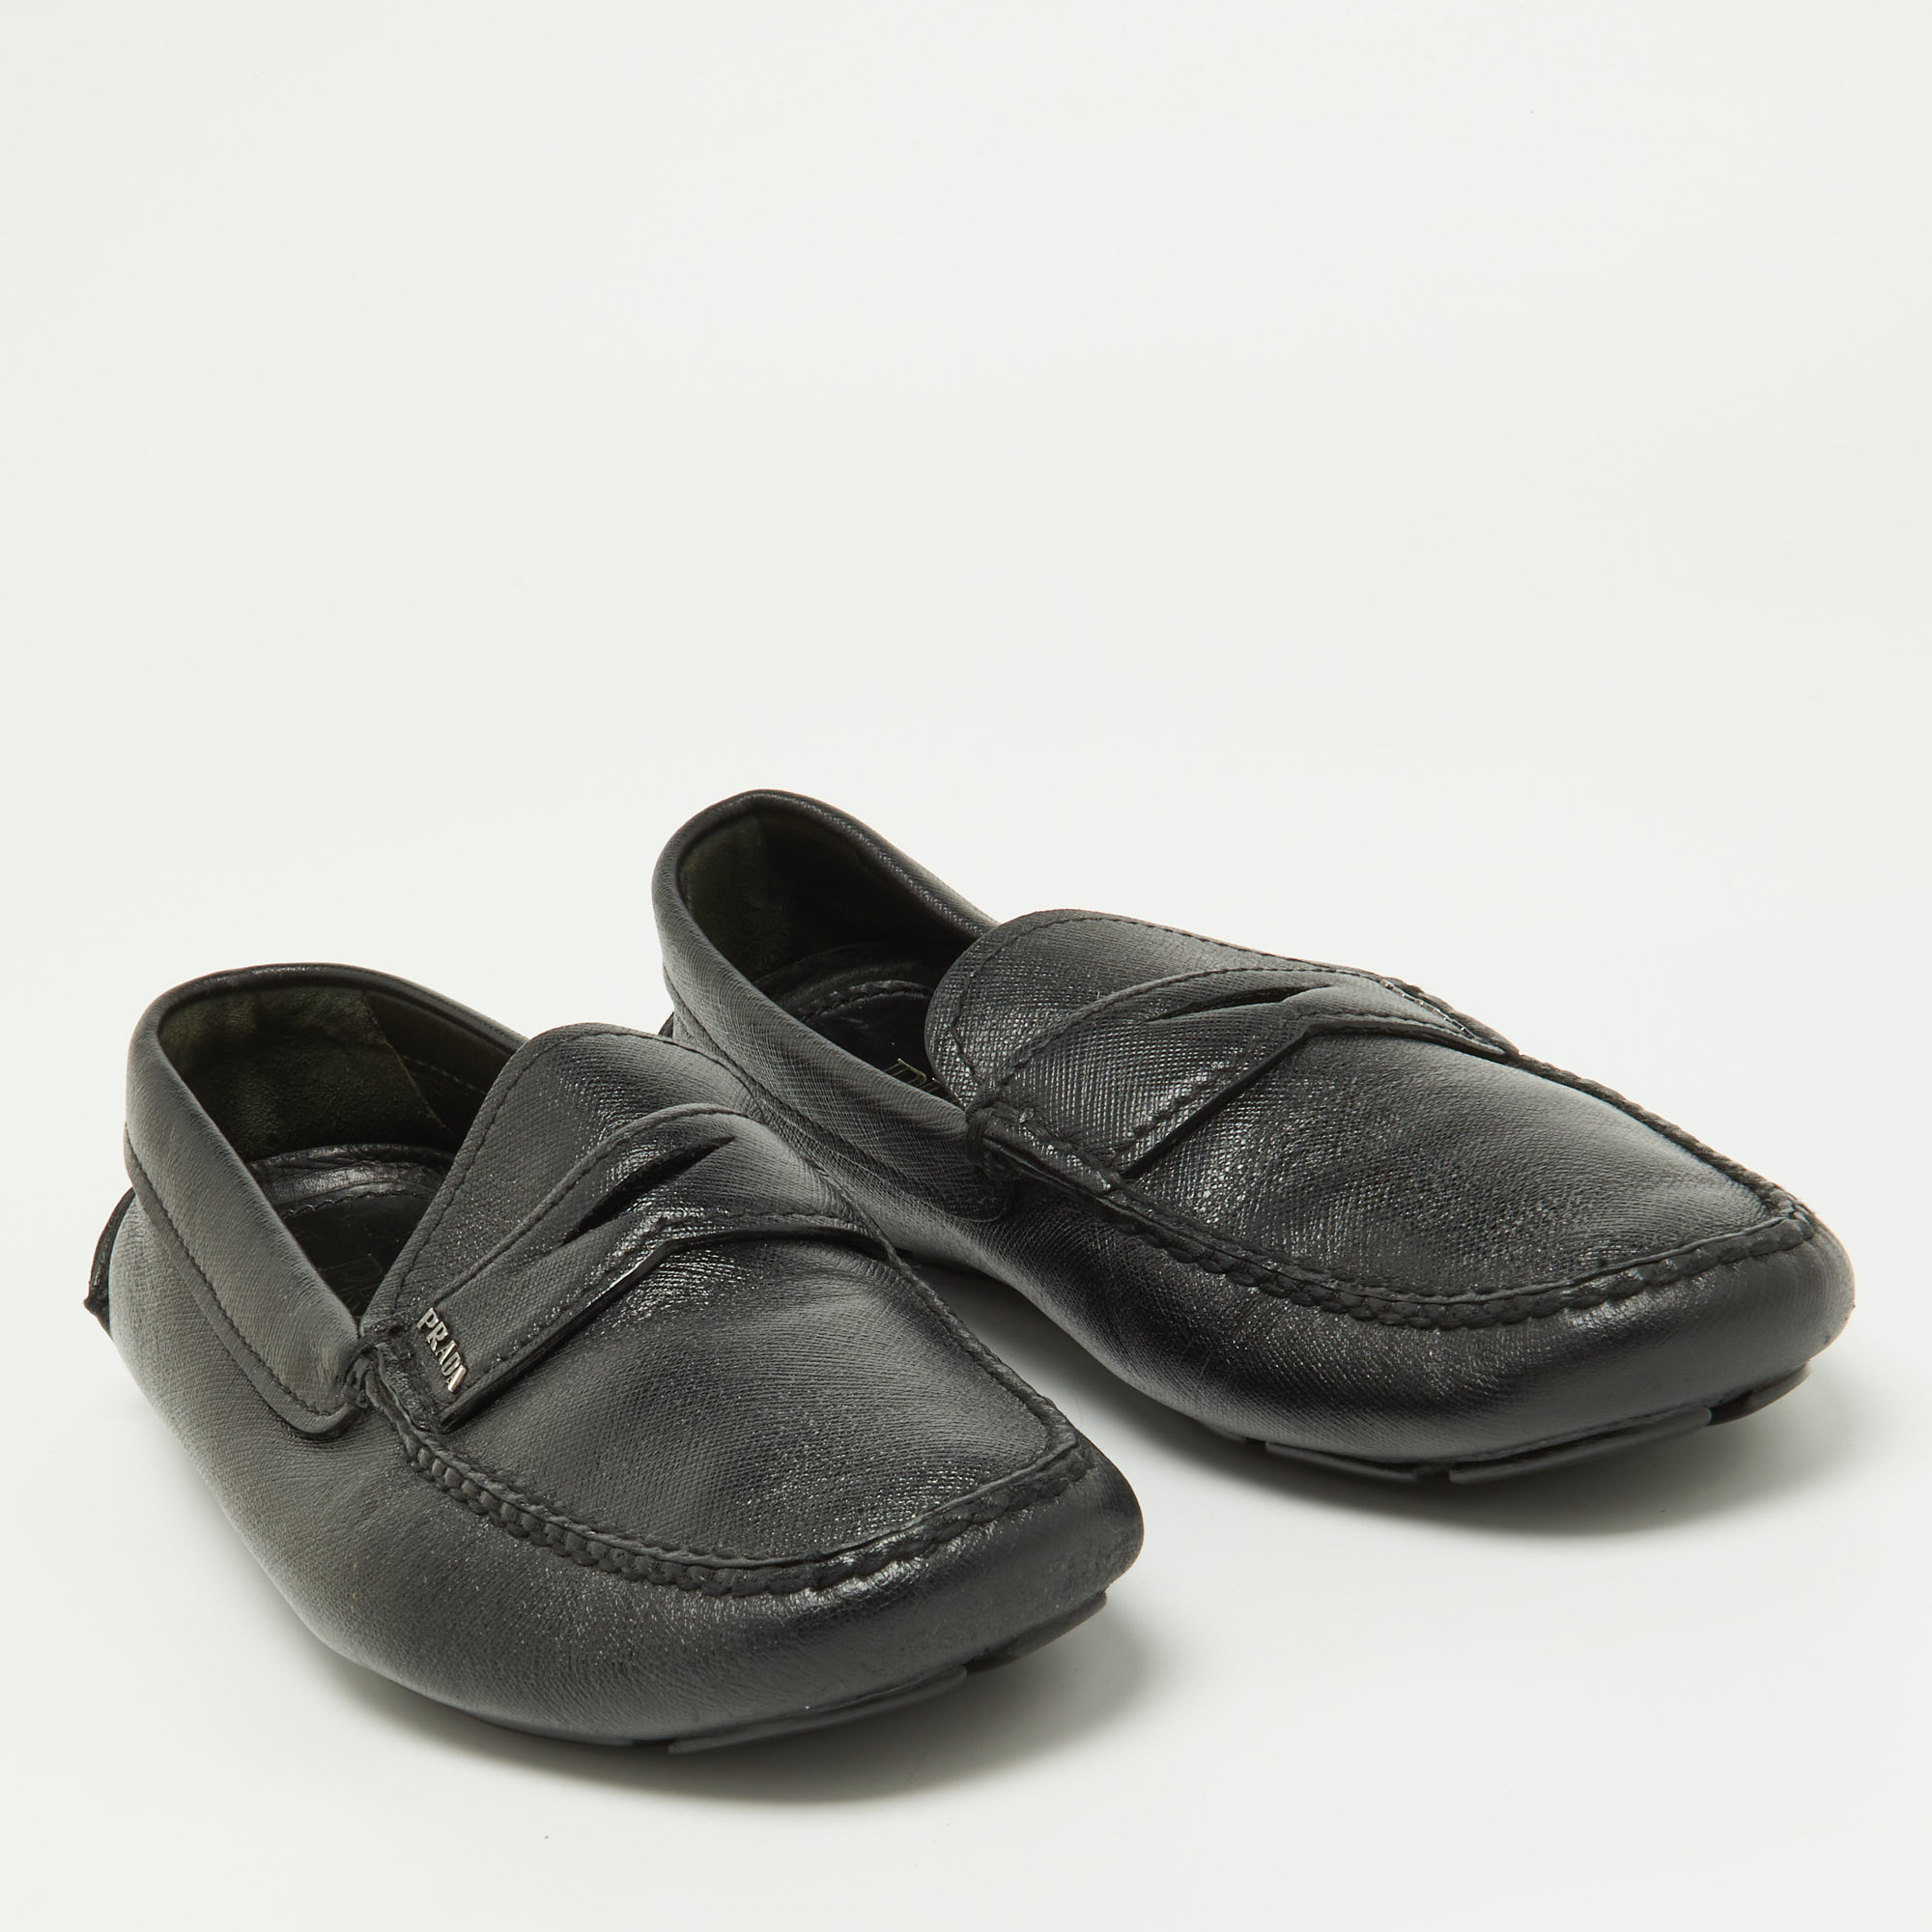 Prada Black Saffiano Leather Penny Loafers Size 40.5